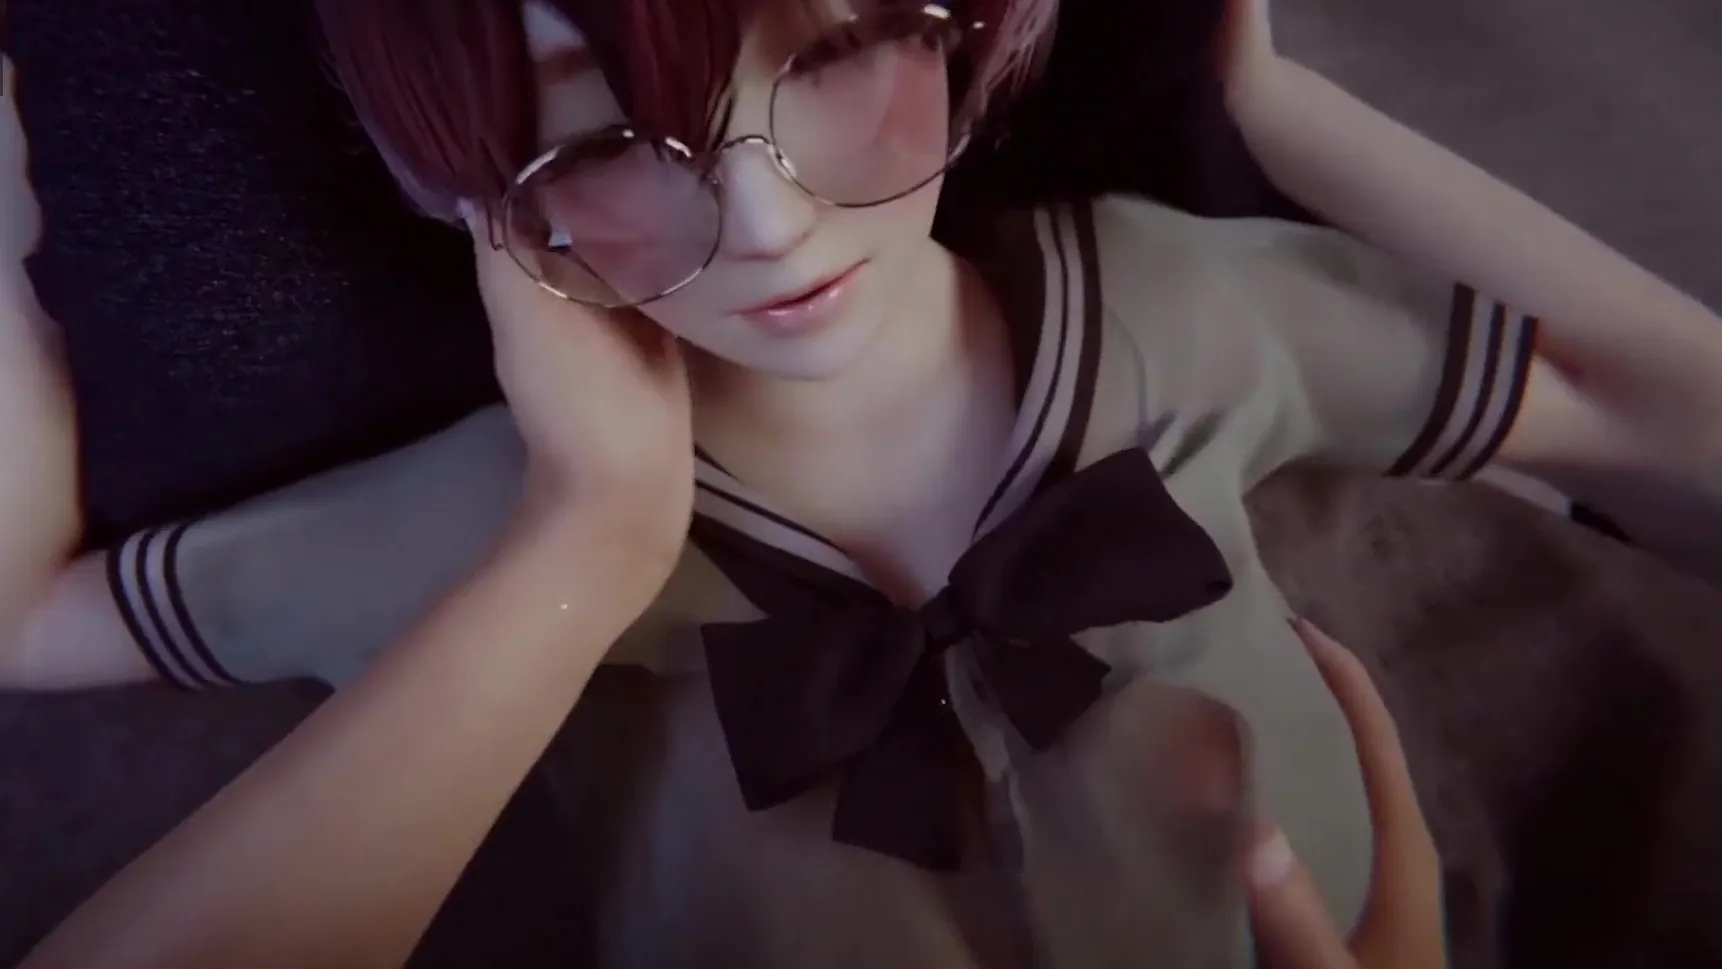 Cartoon Asian Girls Glasses Nude - POV 3d fucking with a teen shy schoolgirl in a cute uniform